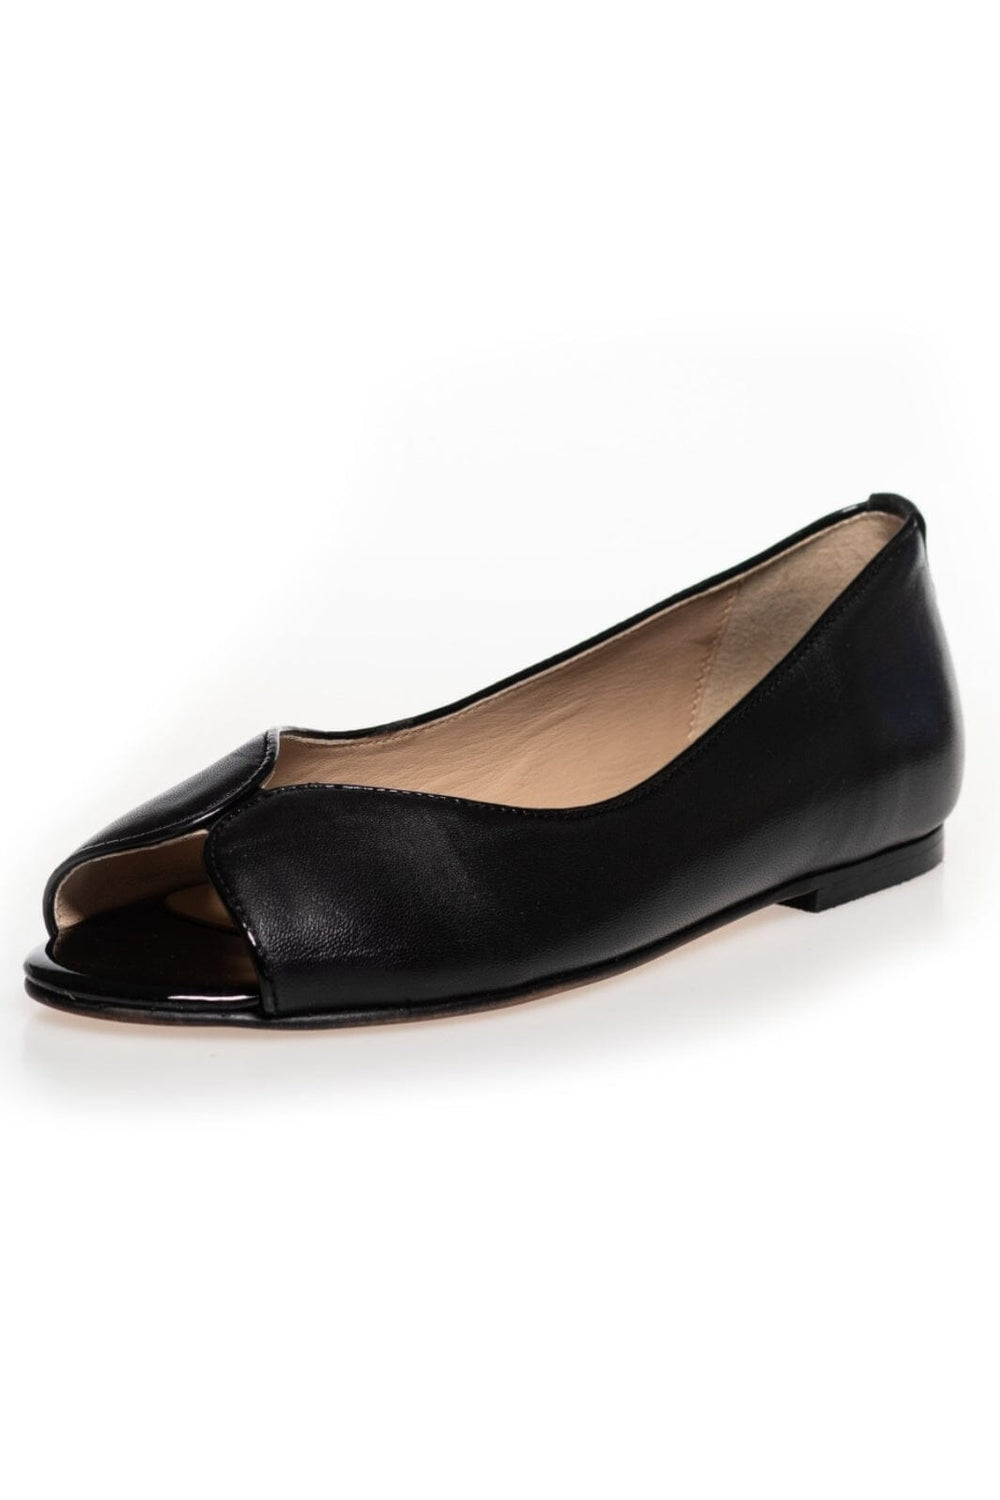 Copenhagen Shoes - Like A Melody - 0001 Black Ballerinaer 